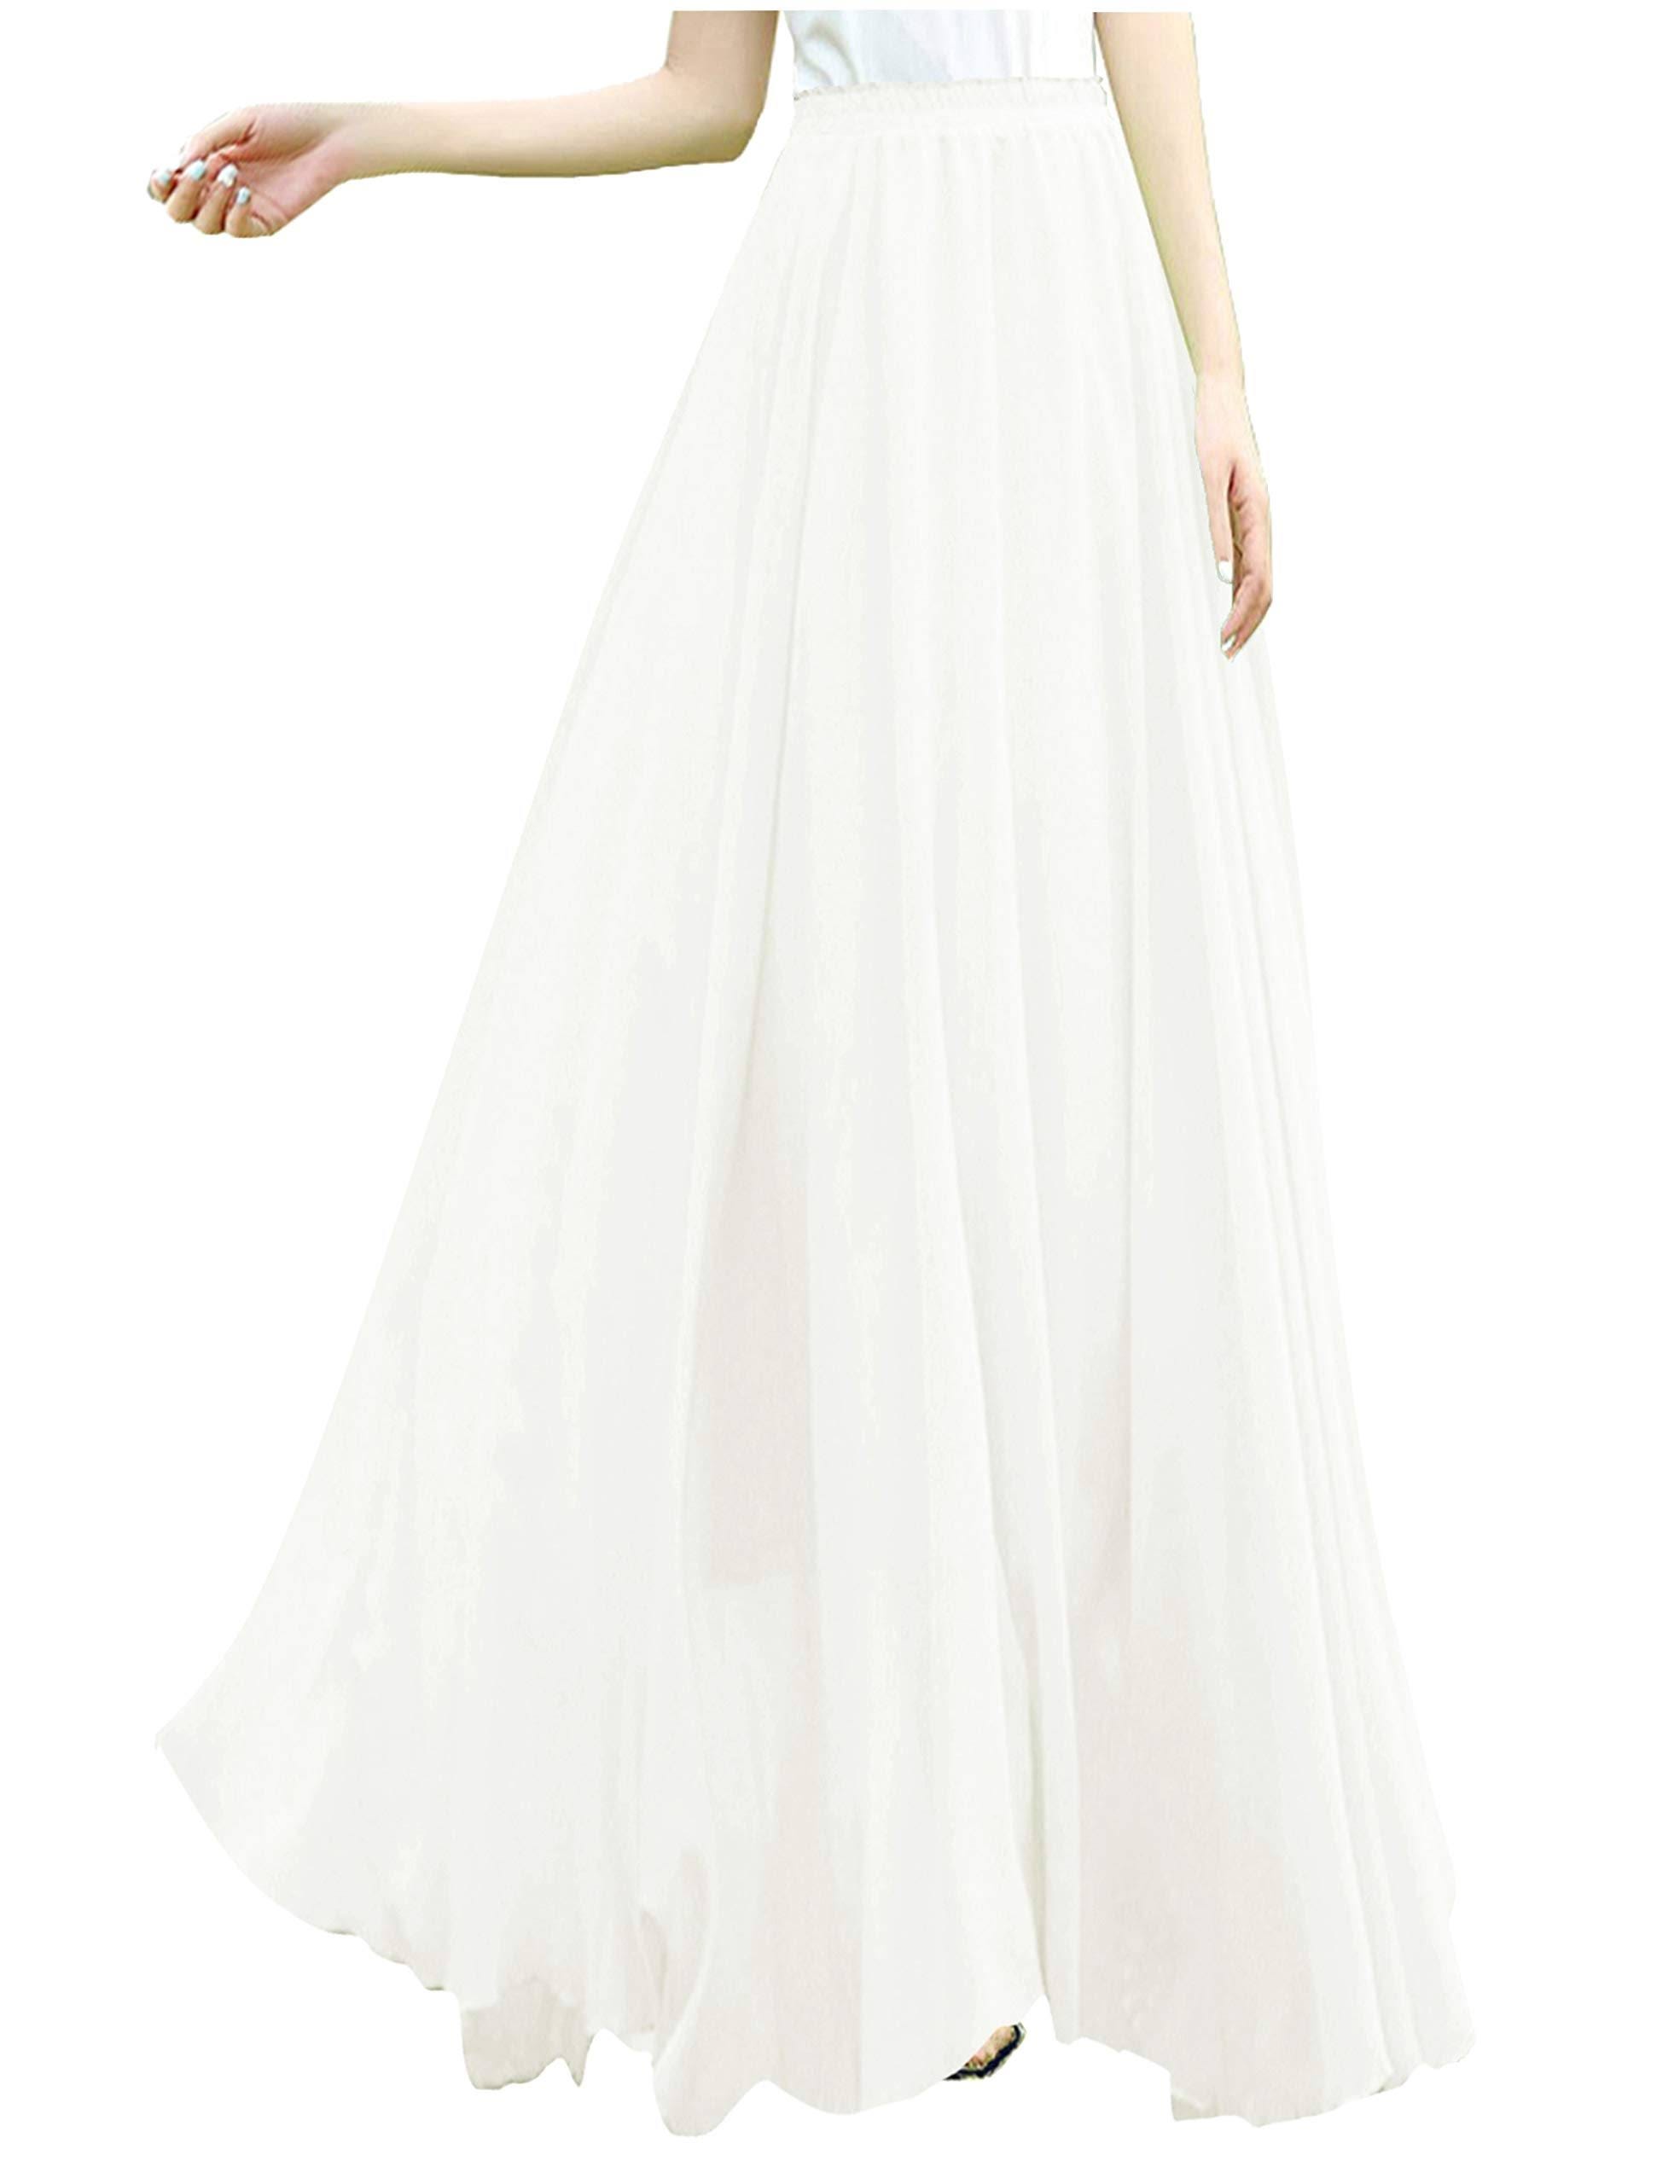 V28 Women's White Maxi Skirt with Elastic High Waist - Versatile and Comfortable Long Skirt | Image